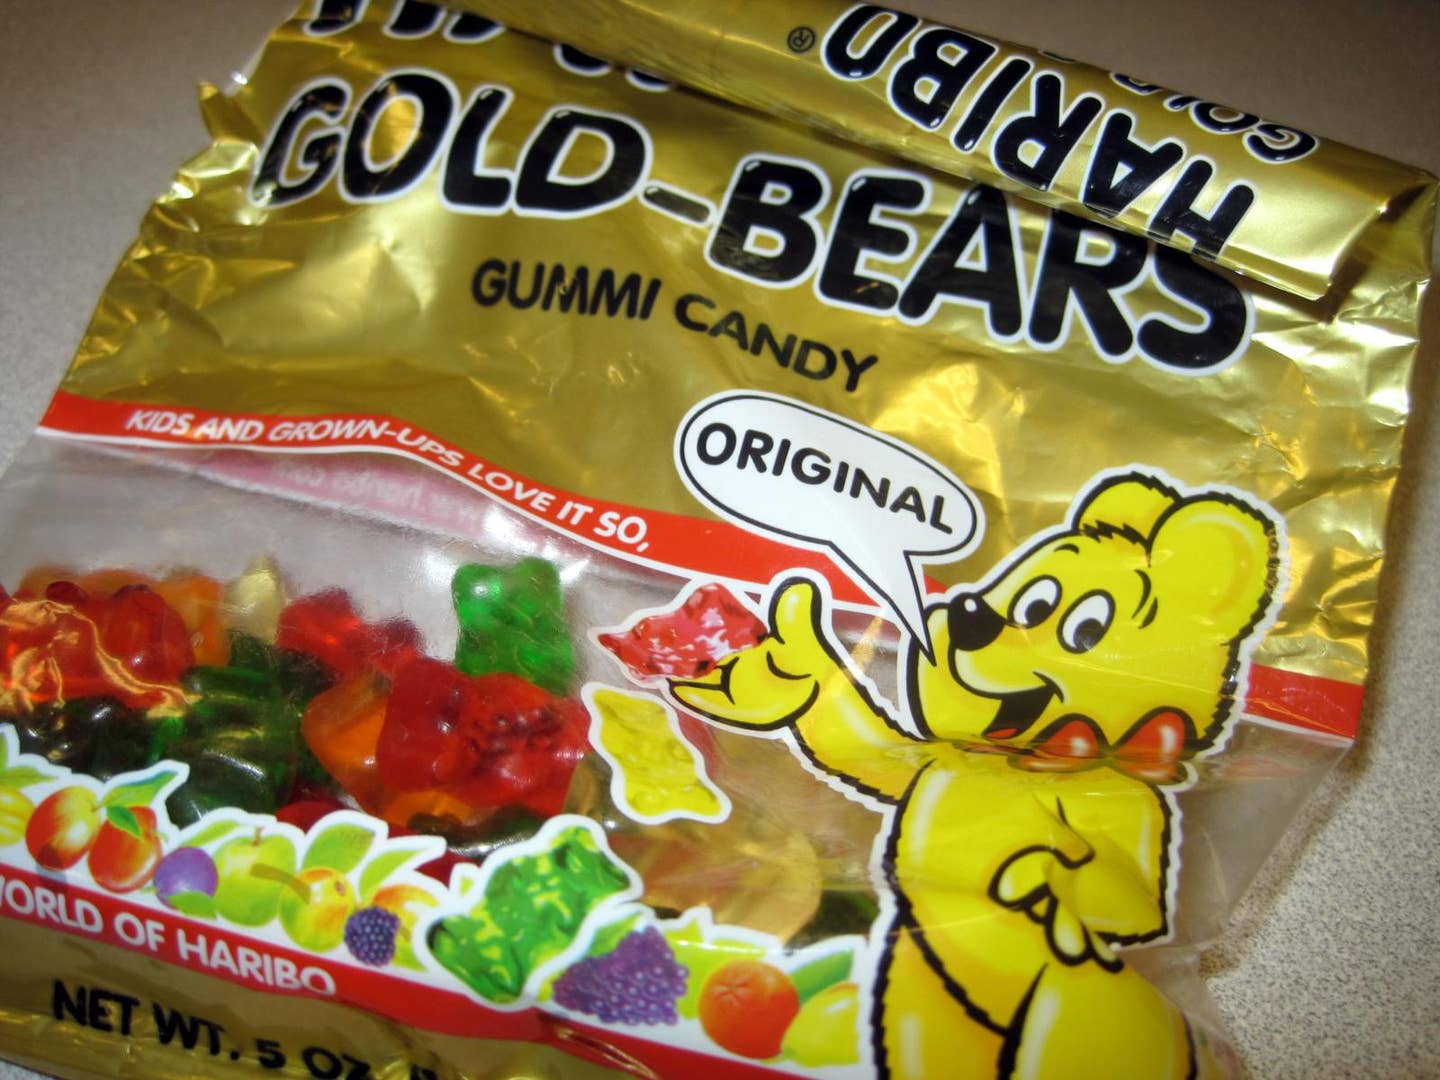 Gummy bear maker Haribo slammed for suppliers' labor practices